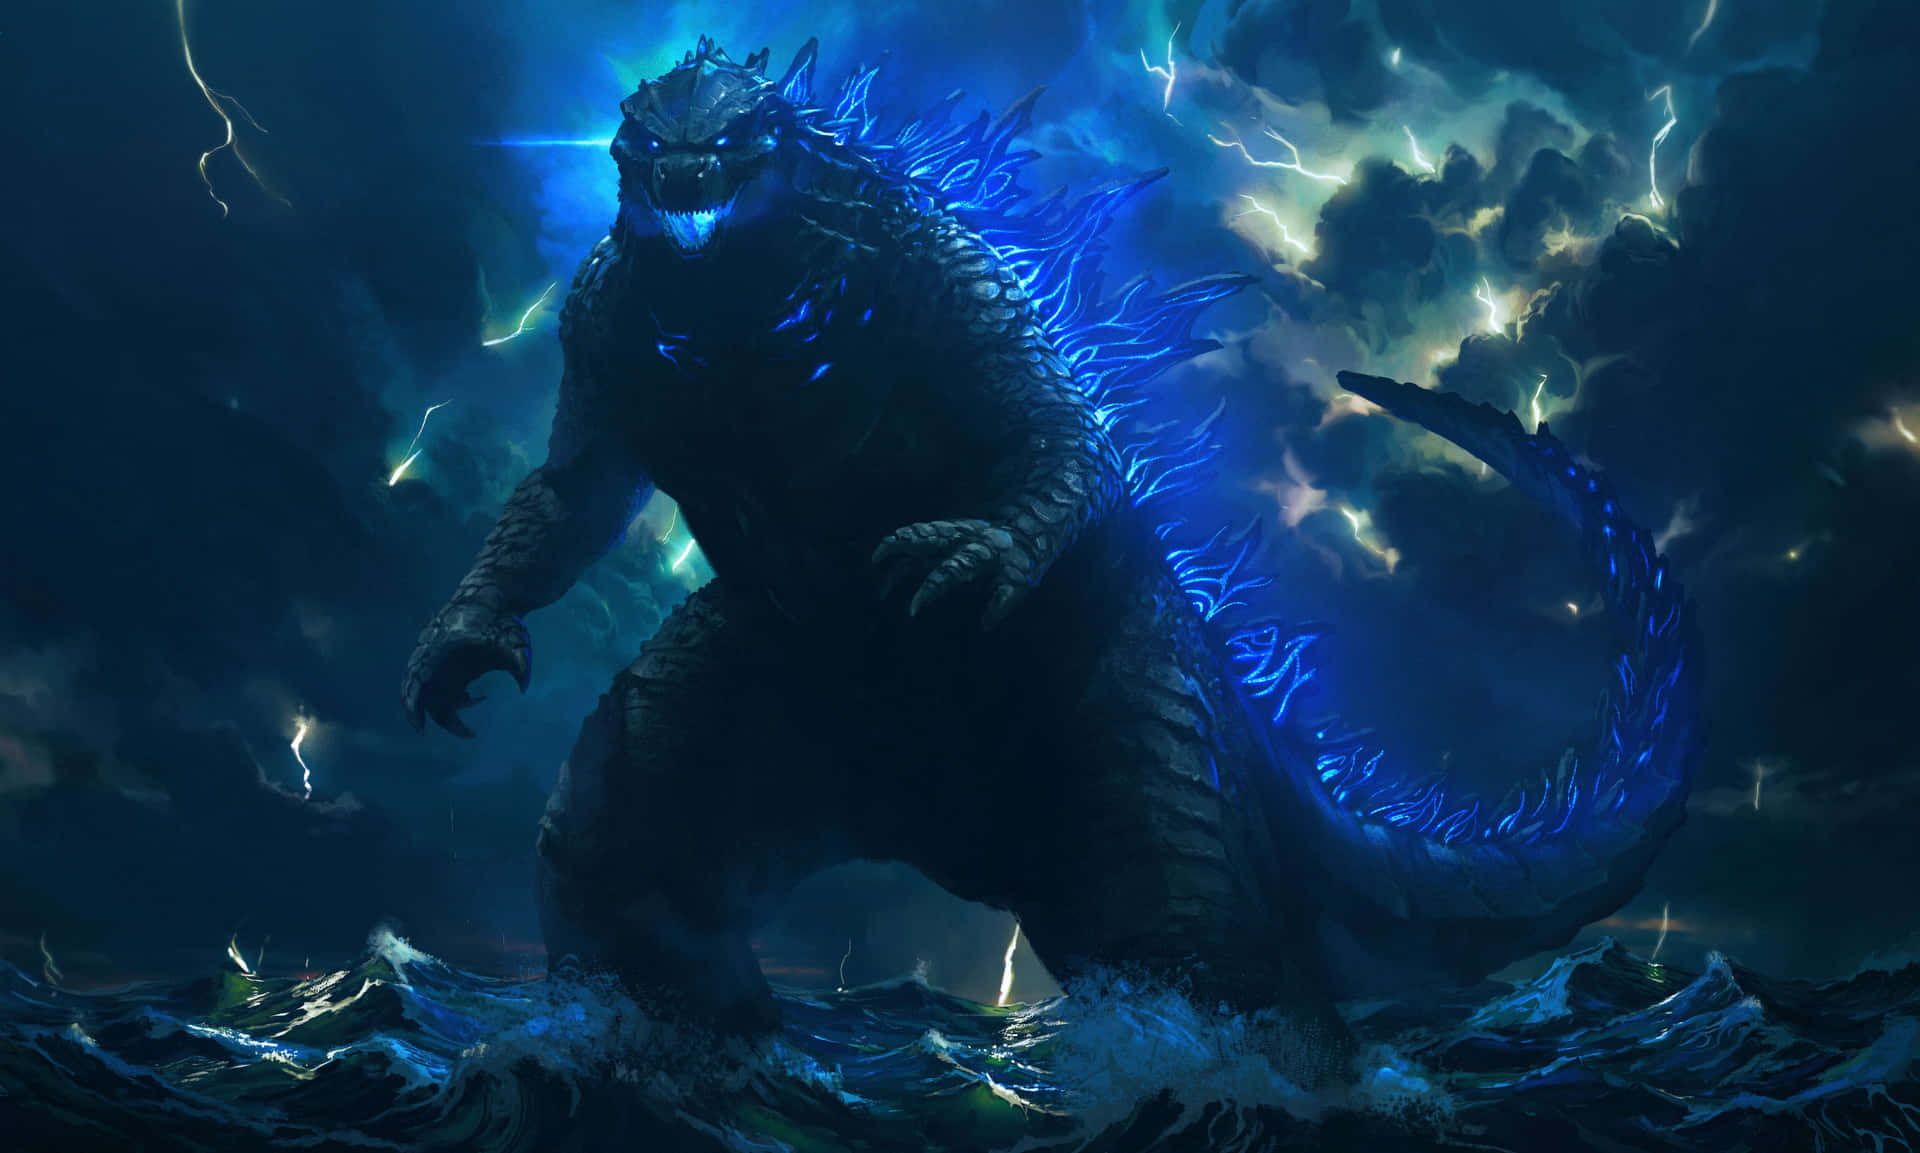 An Iconic Godzilla Stomping Through the City